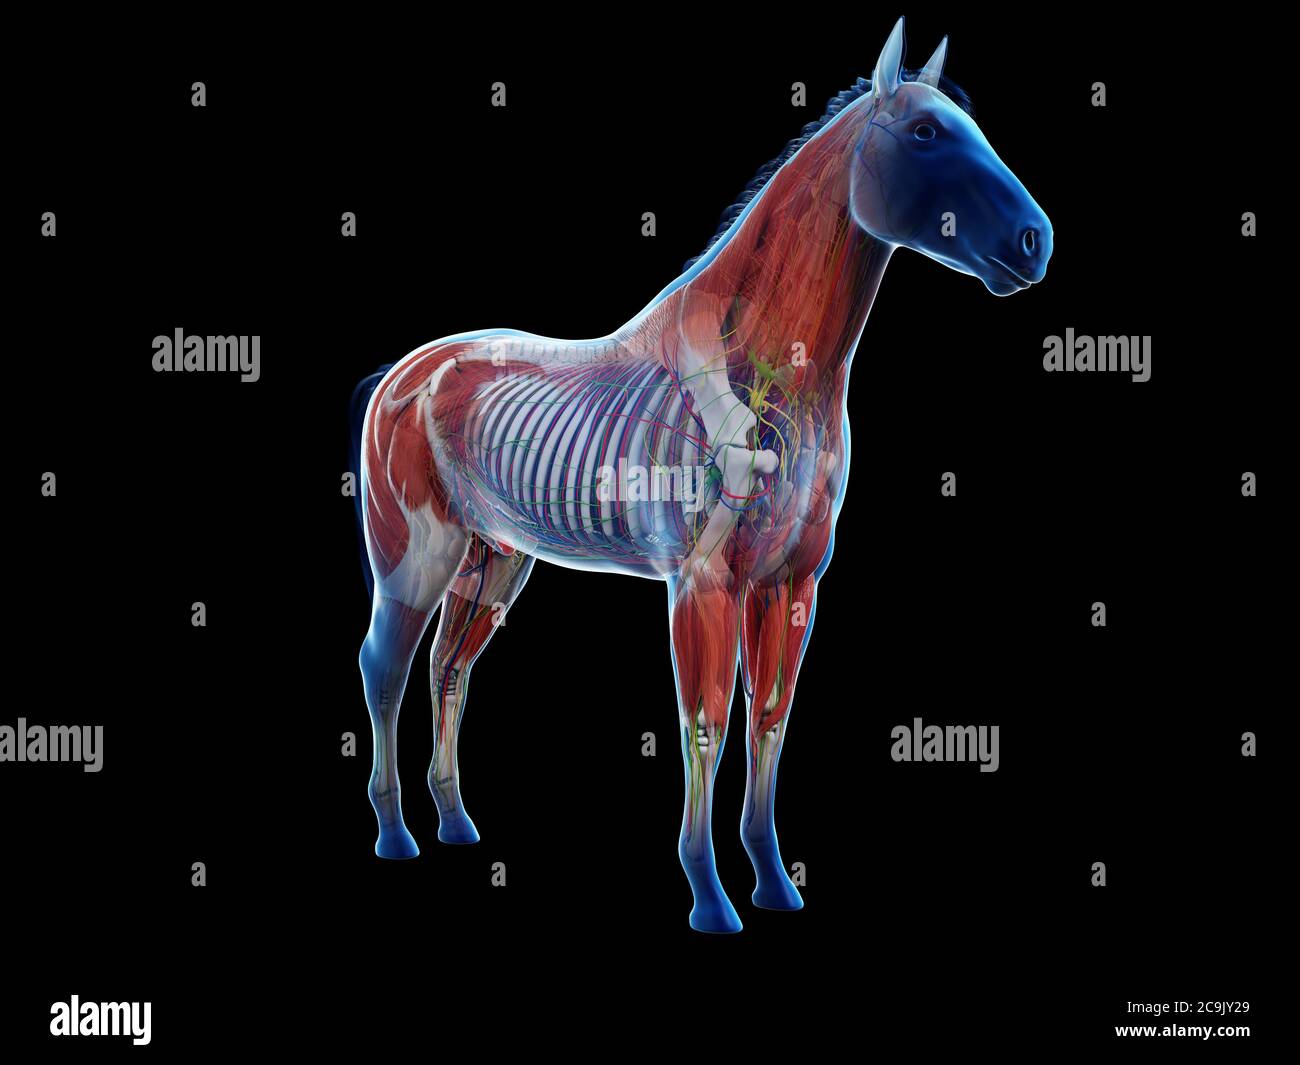 Horse anatomy, computer illustration. Stock Photo